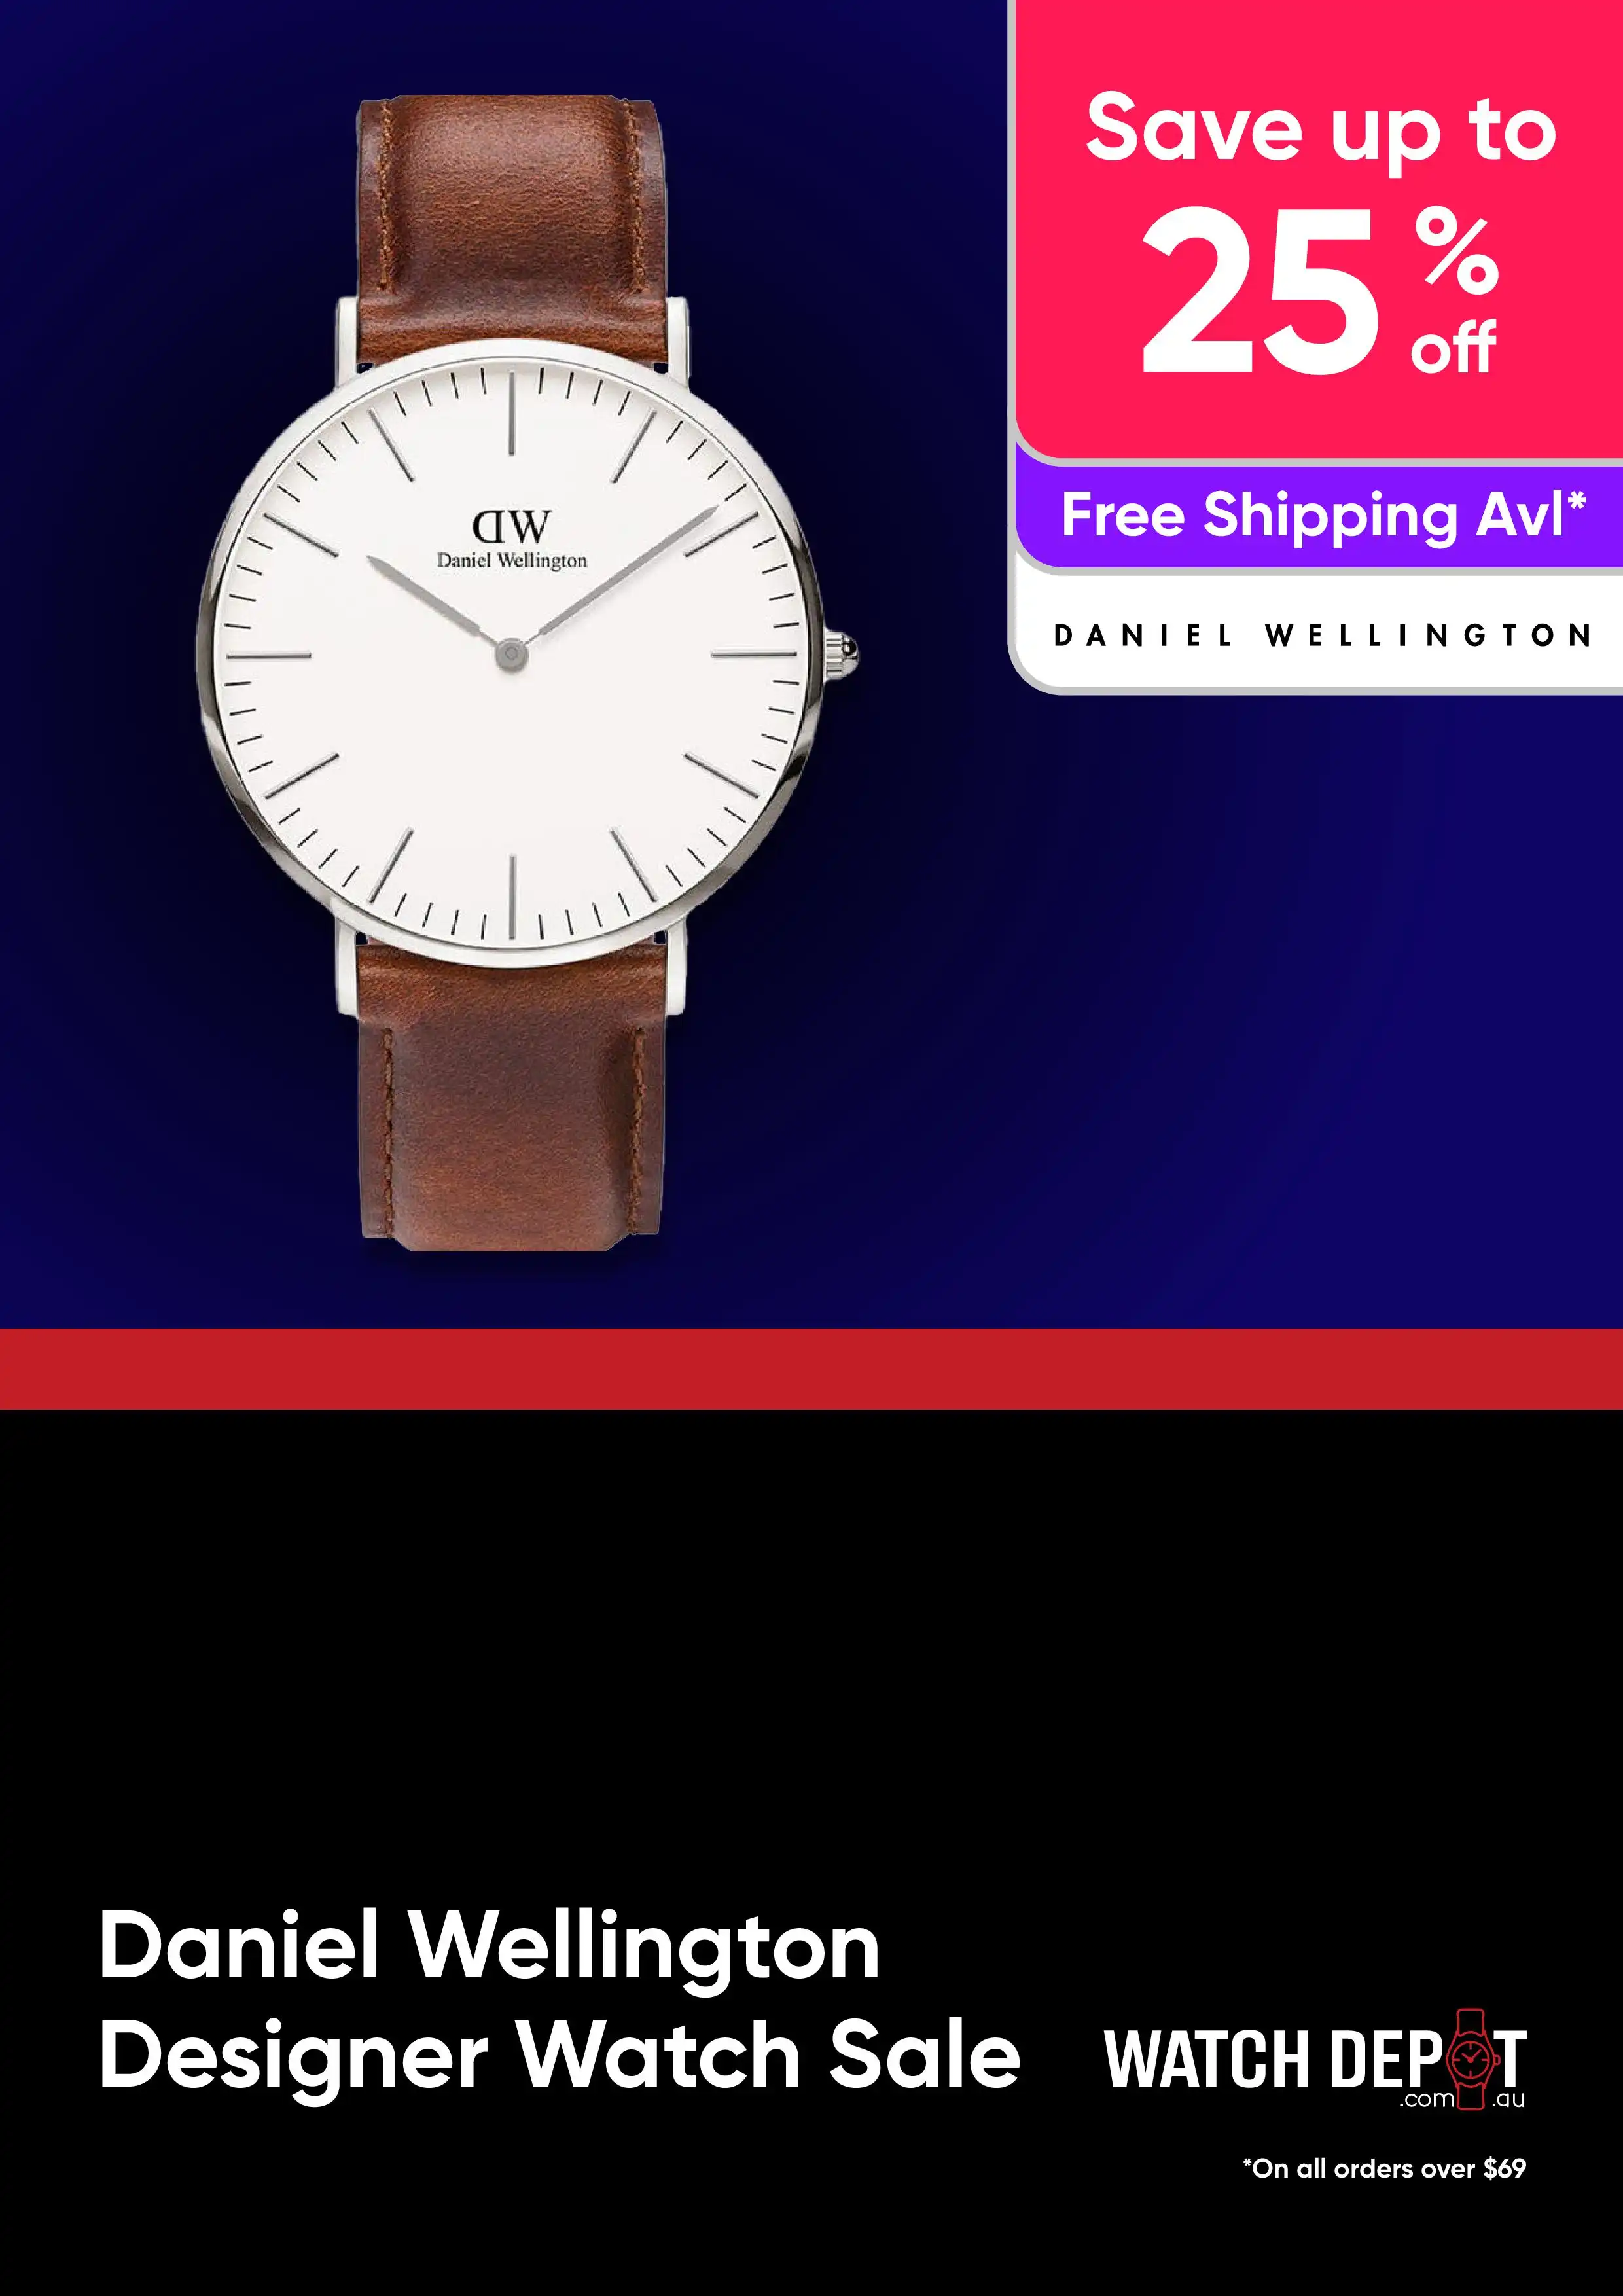 Daniel Wellington Designer Watch Sale - Up to 25% off